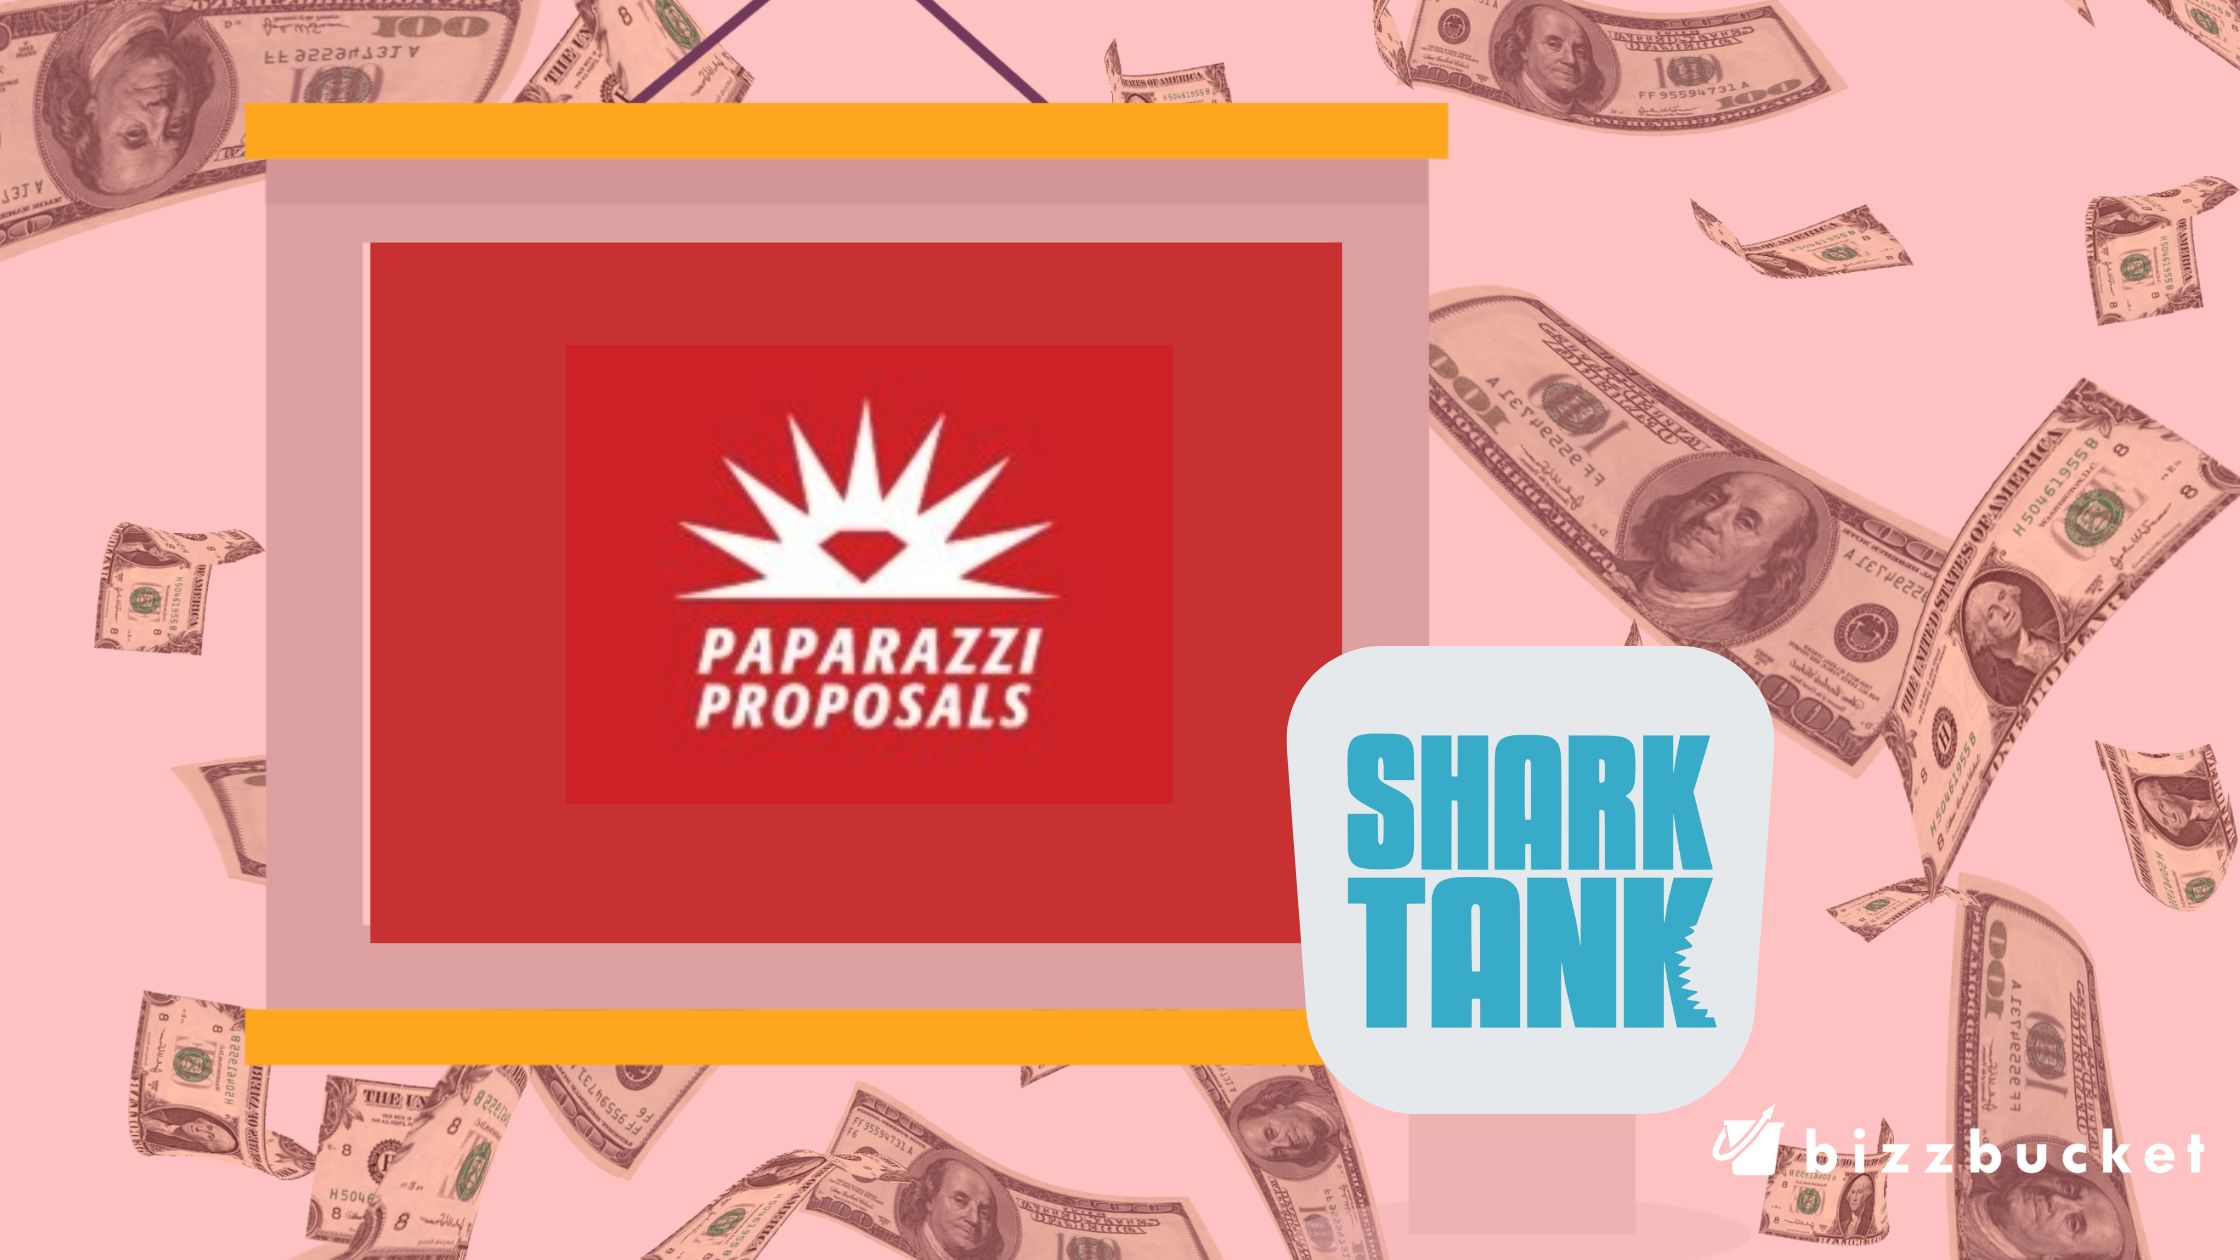 Paparazzi Proposals after Shark Tank